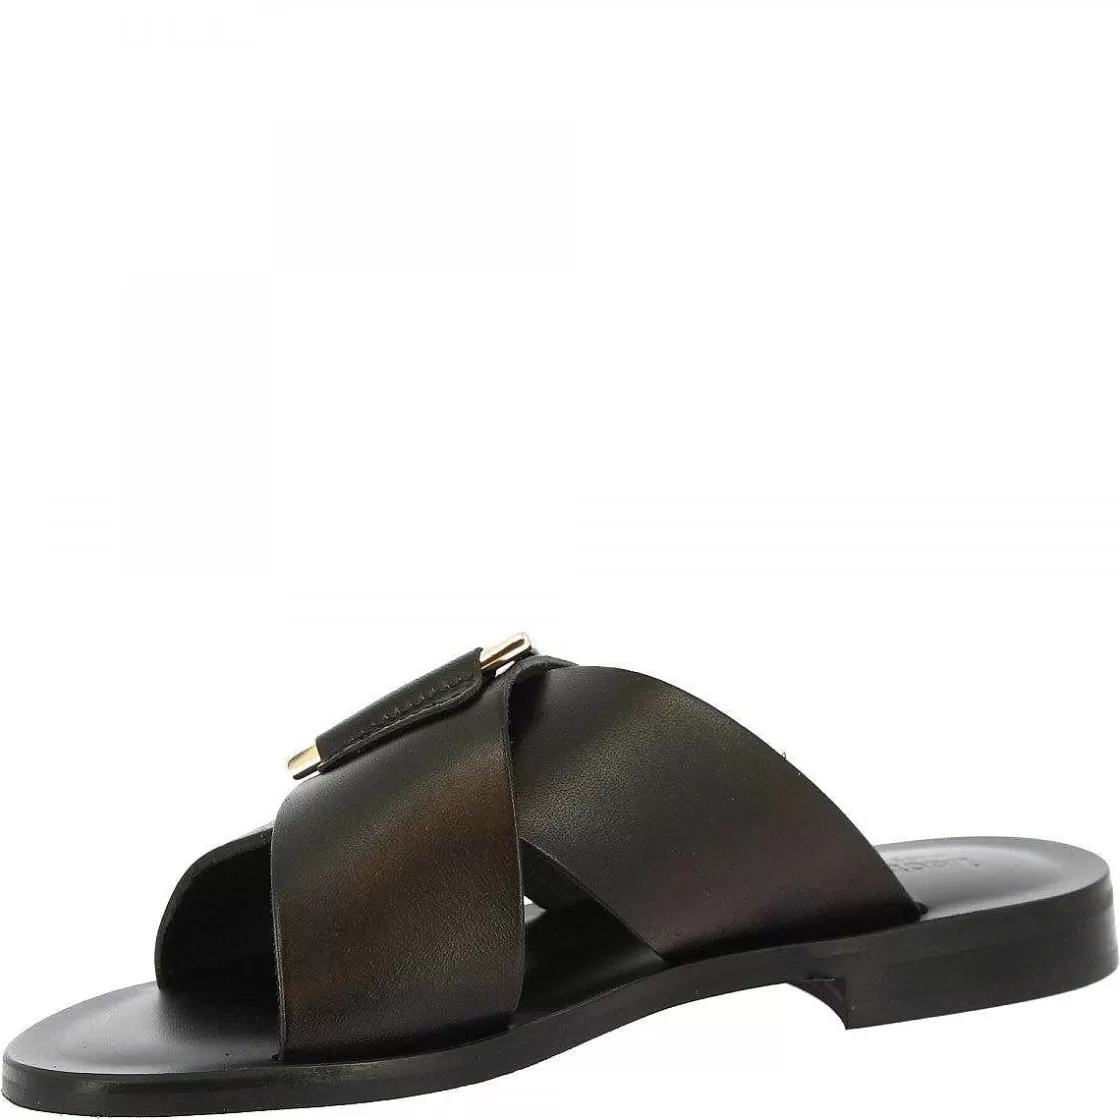 Leonardo Women'S Handmade Slipper Sandals In Black Leather With Golden Buckle Online